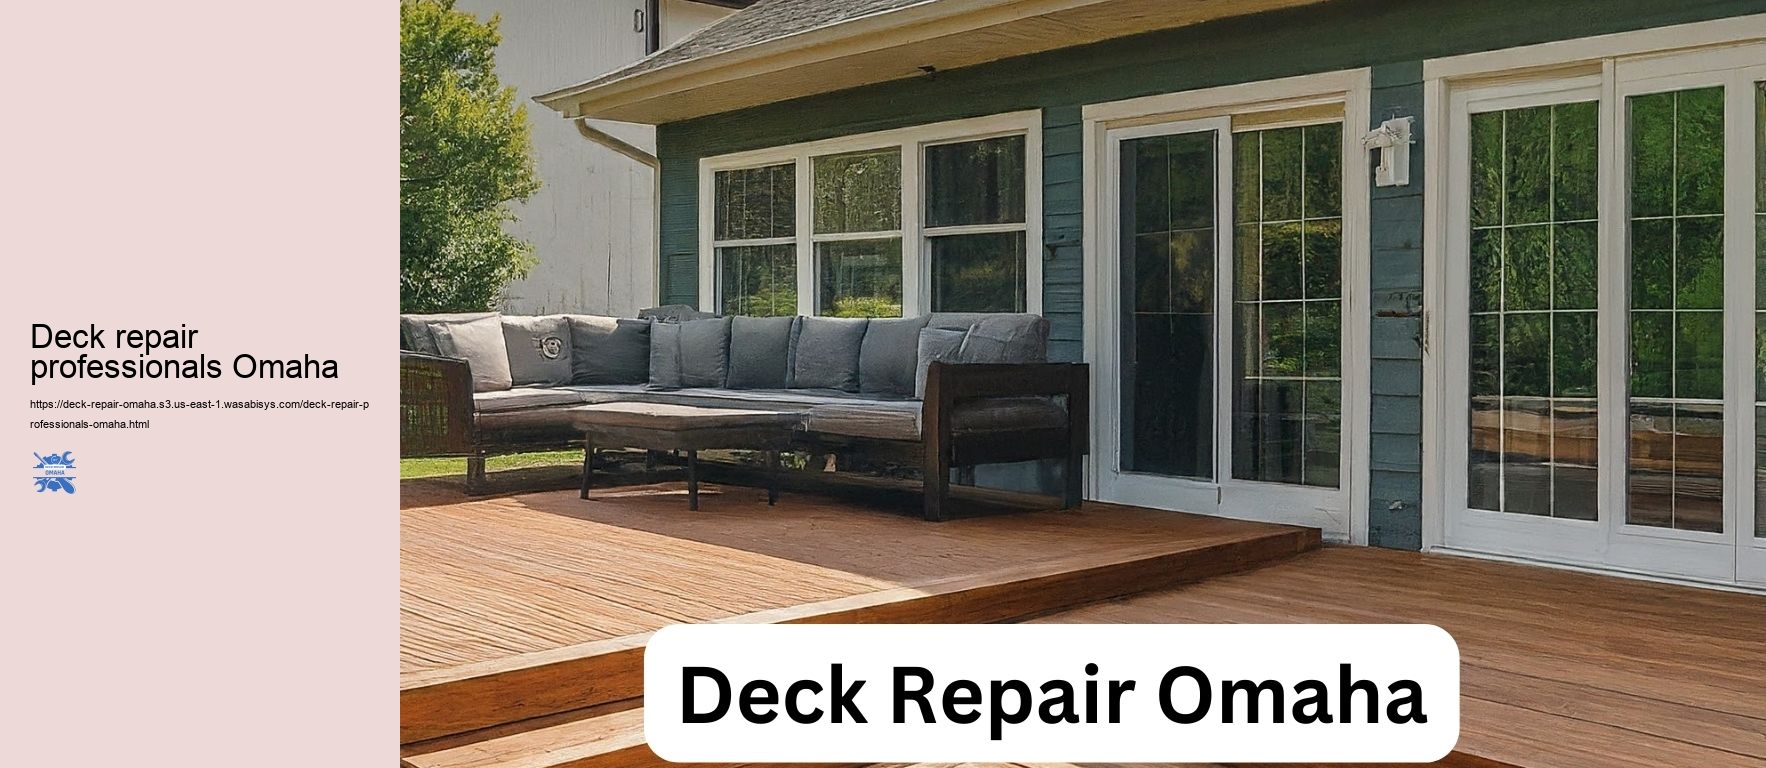 Deck repair professionals Omaha